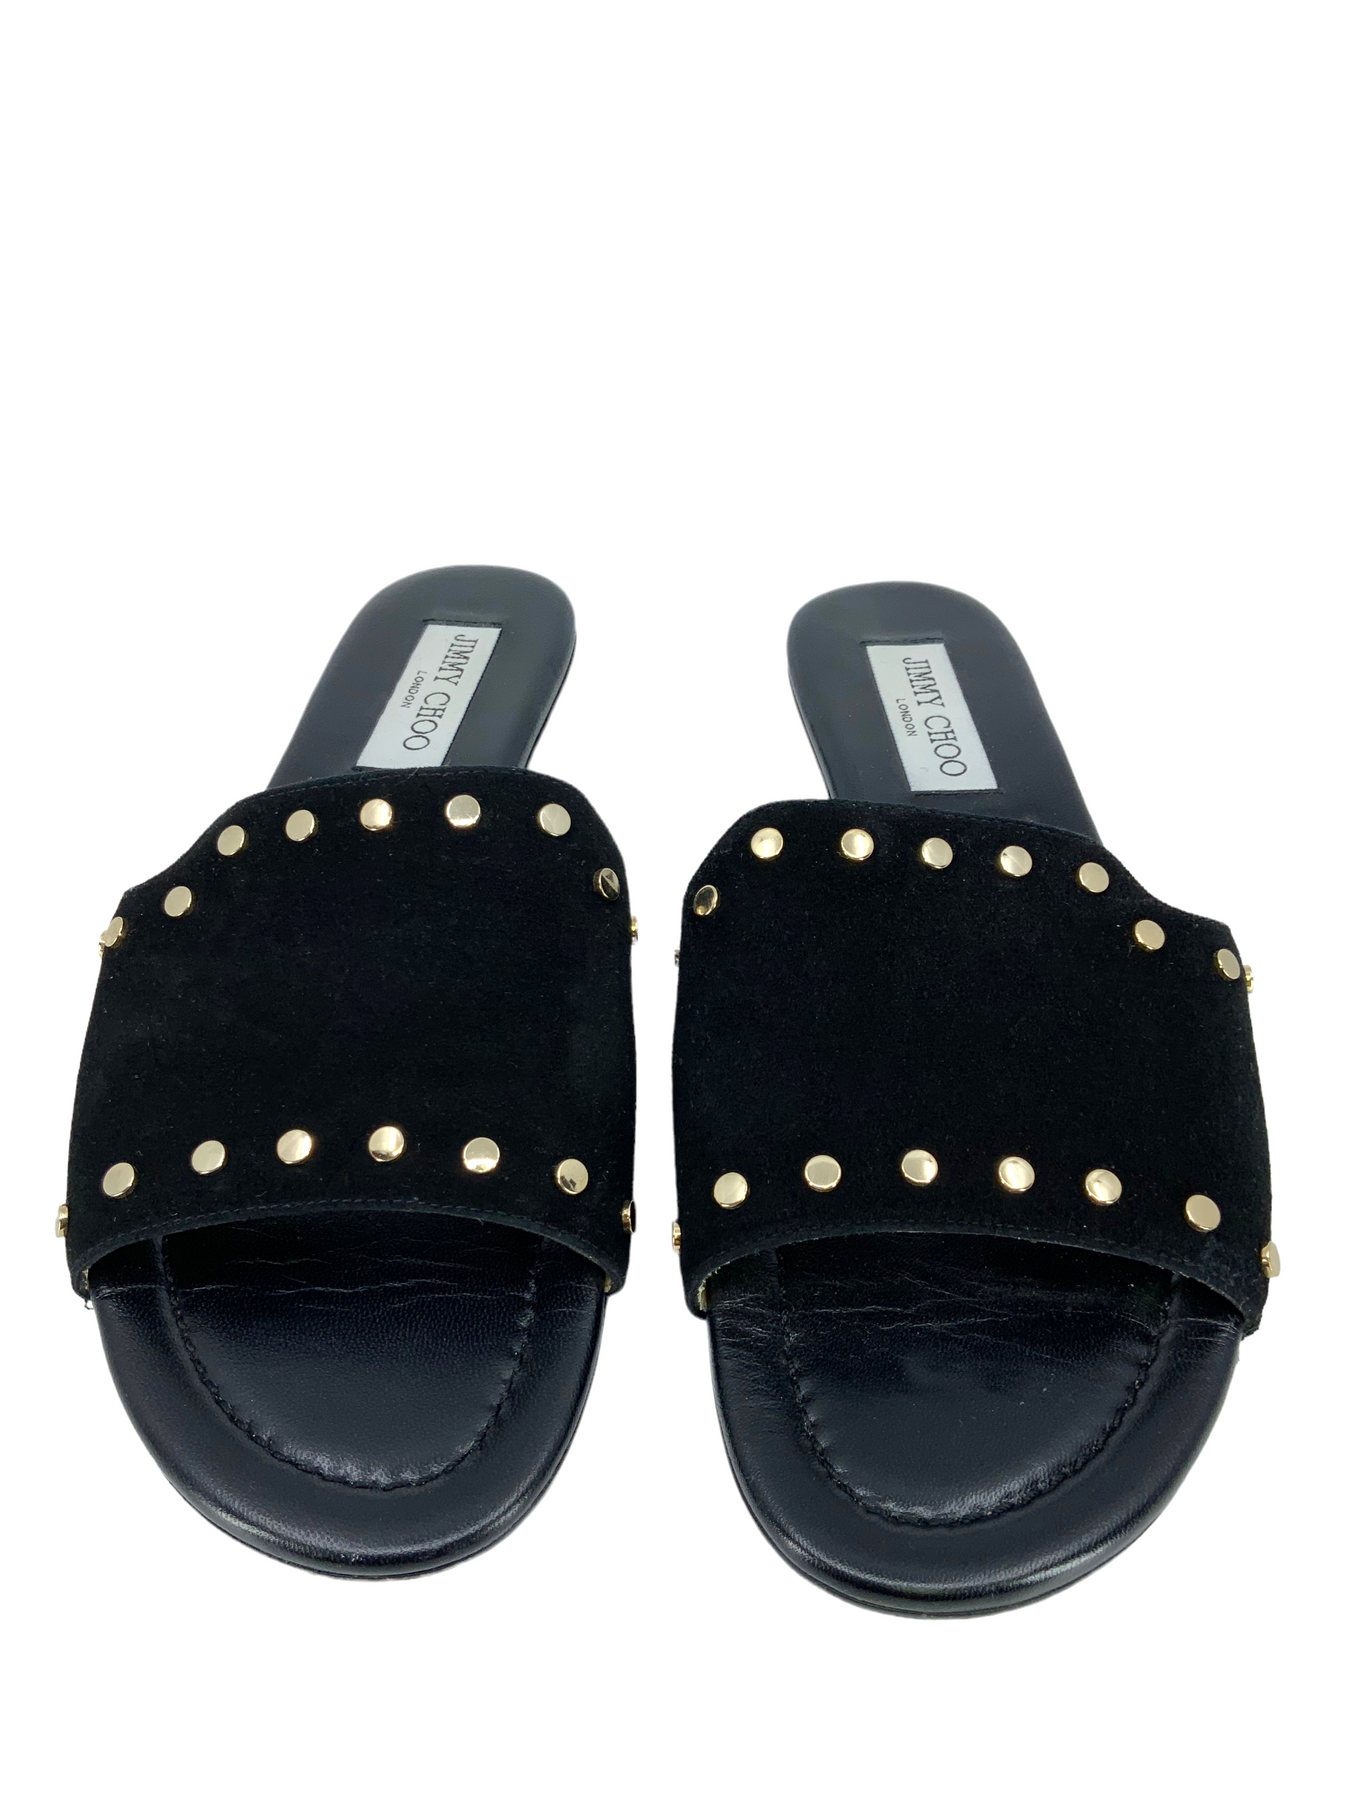 Jimmy Choo Granger Raffia Slide Sandals Size 9